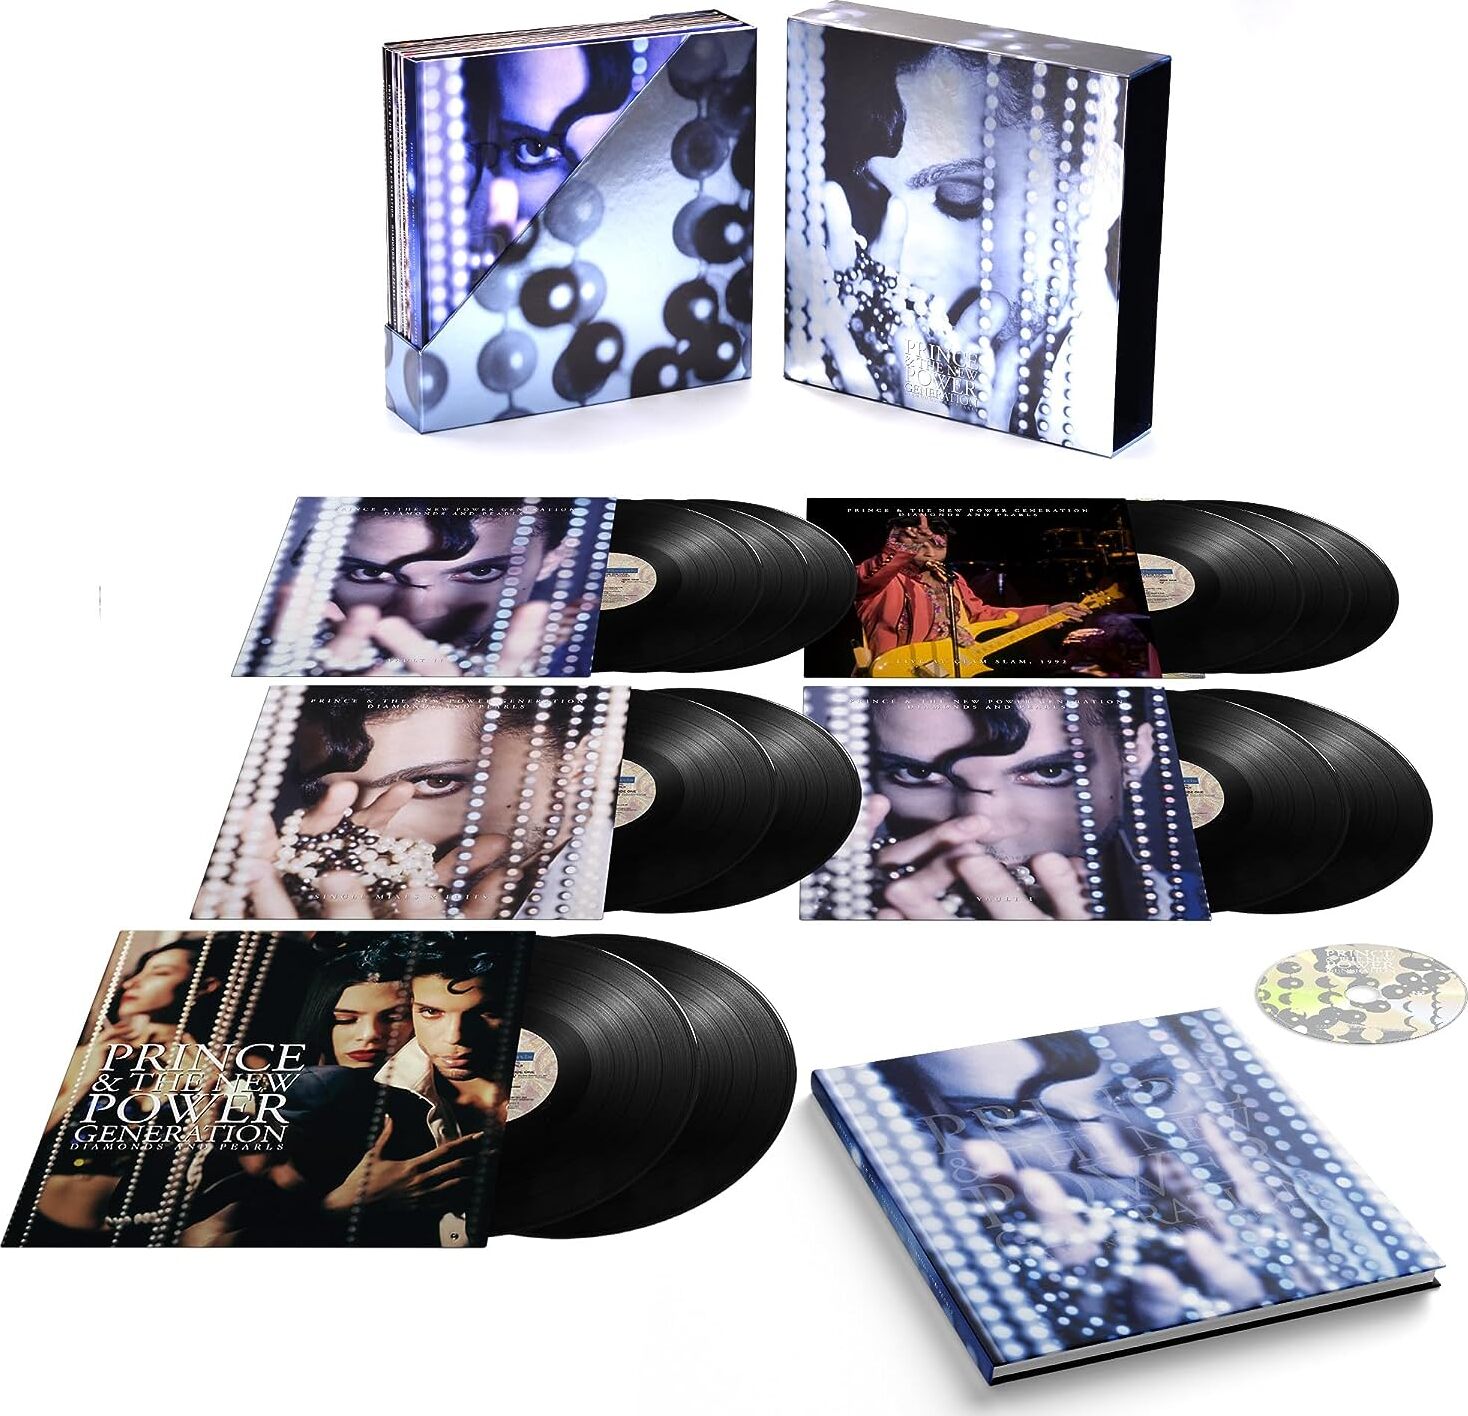 G.E.M.'s new spot album Revelation official version 2CDs - AliExpress